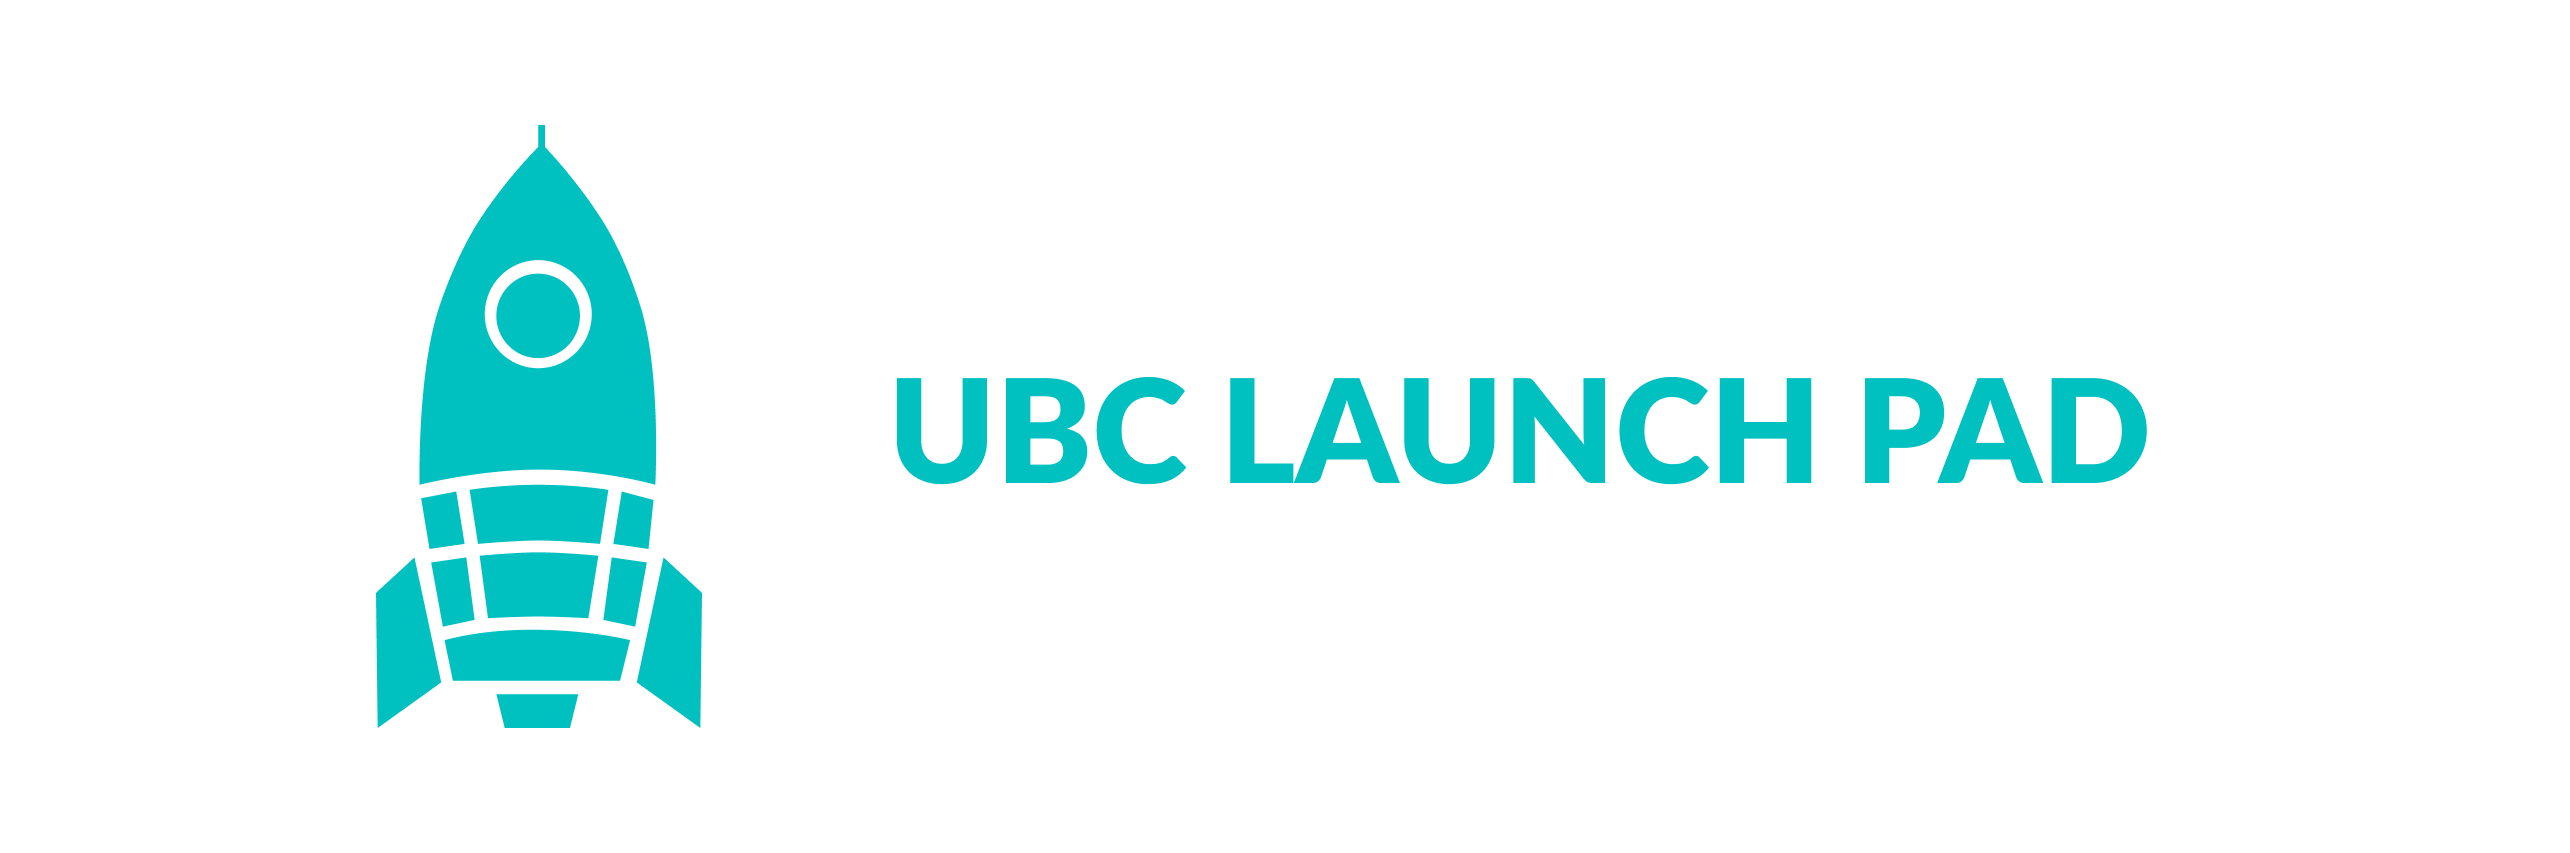 ubc launch pad